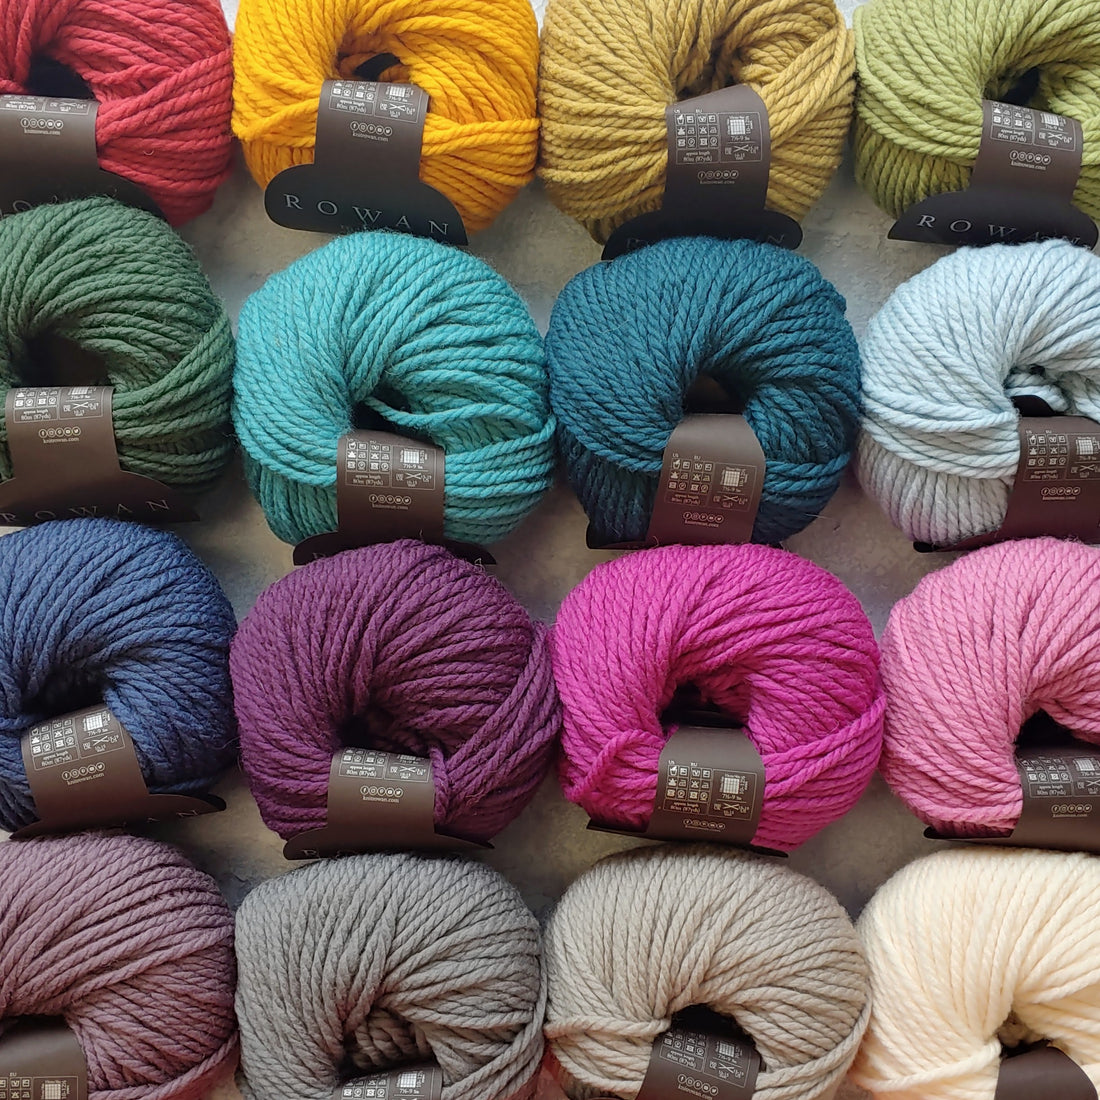  rowan big wool colorful array of yarn balls